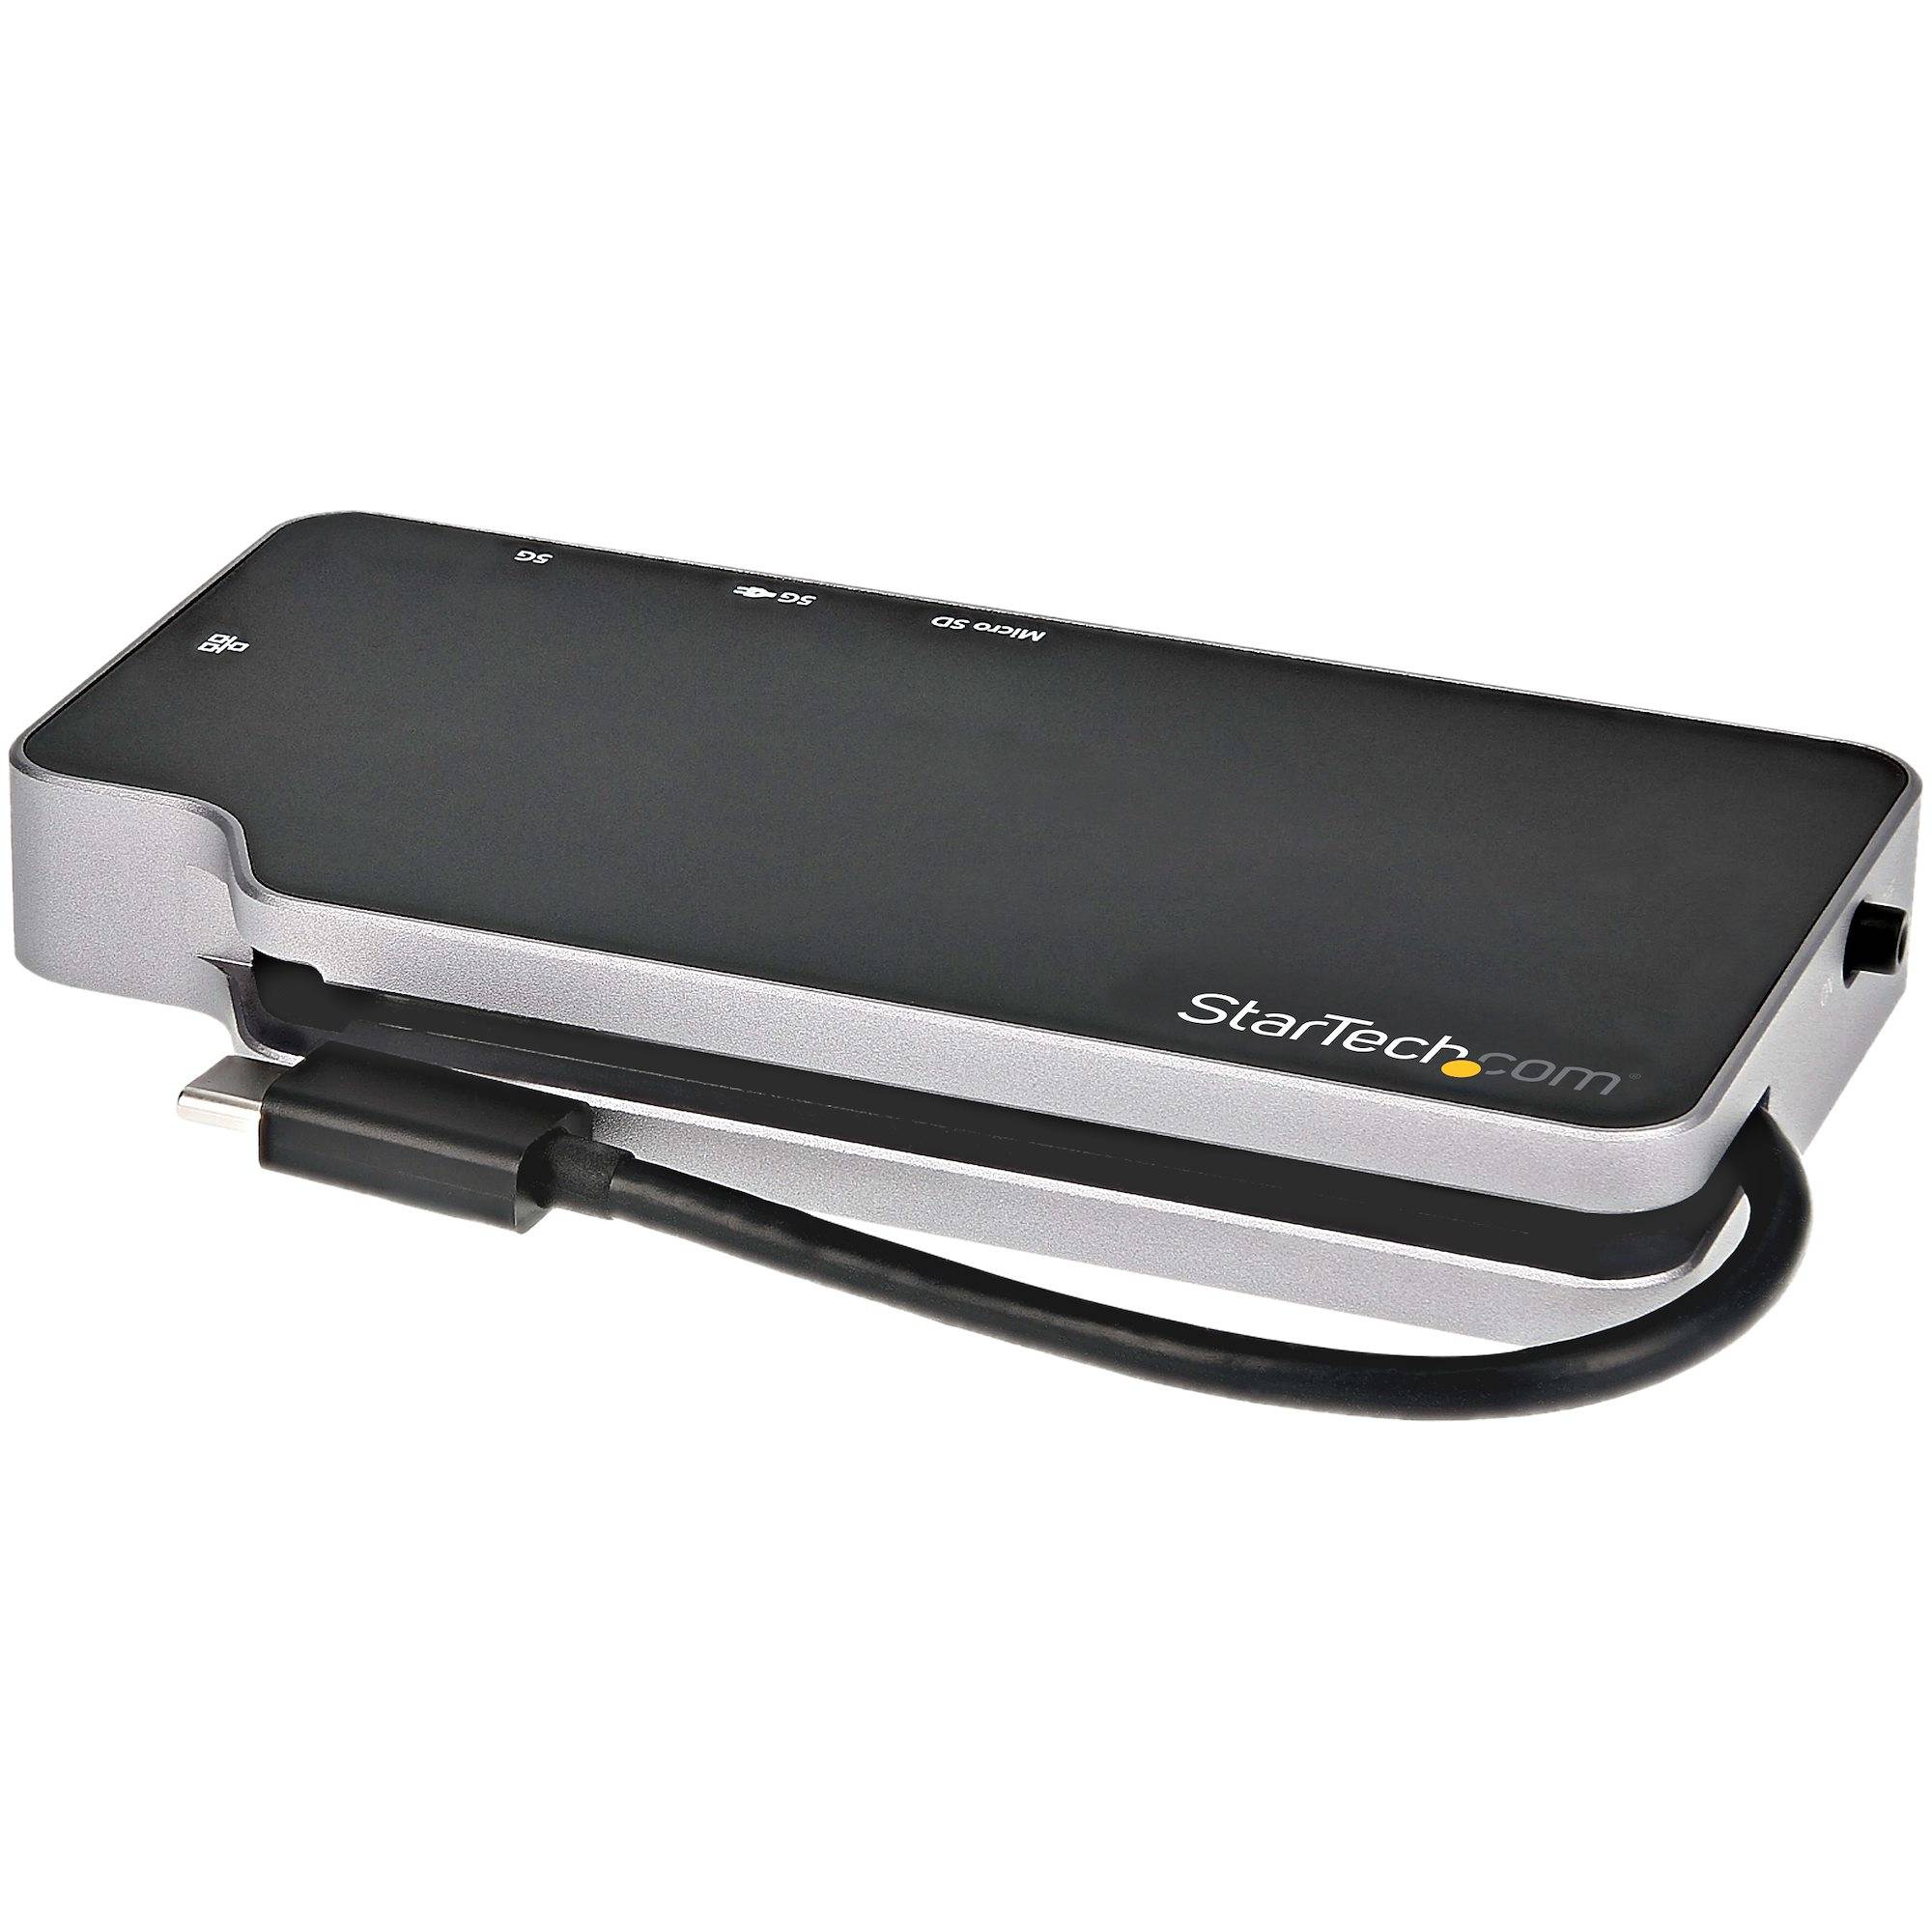 Rca Informatique - image du produit : 4K USB C MULTIPORT ADAPTER HDMI 4K HDMI/VGA/POWER DELIVERY/10GBP